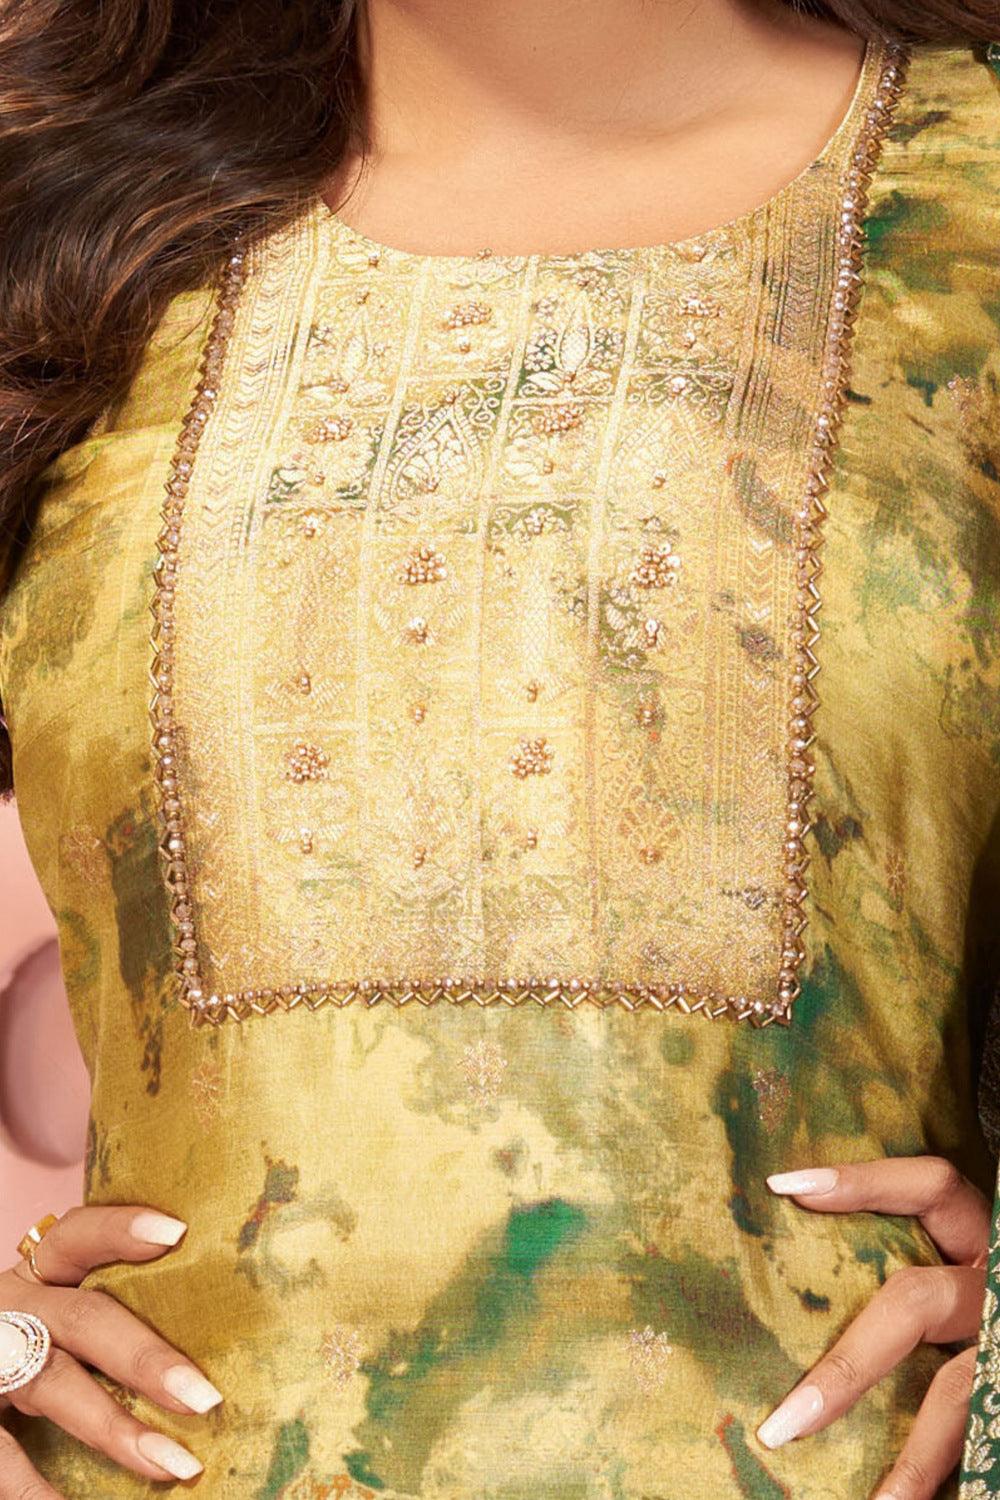 Lemon Green with Tie and Dye Print, Beads and Banaras work Straight Cut Salwar Suit - Seasons Chennai